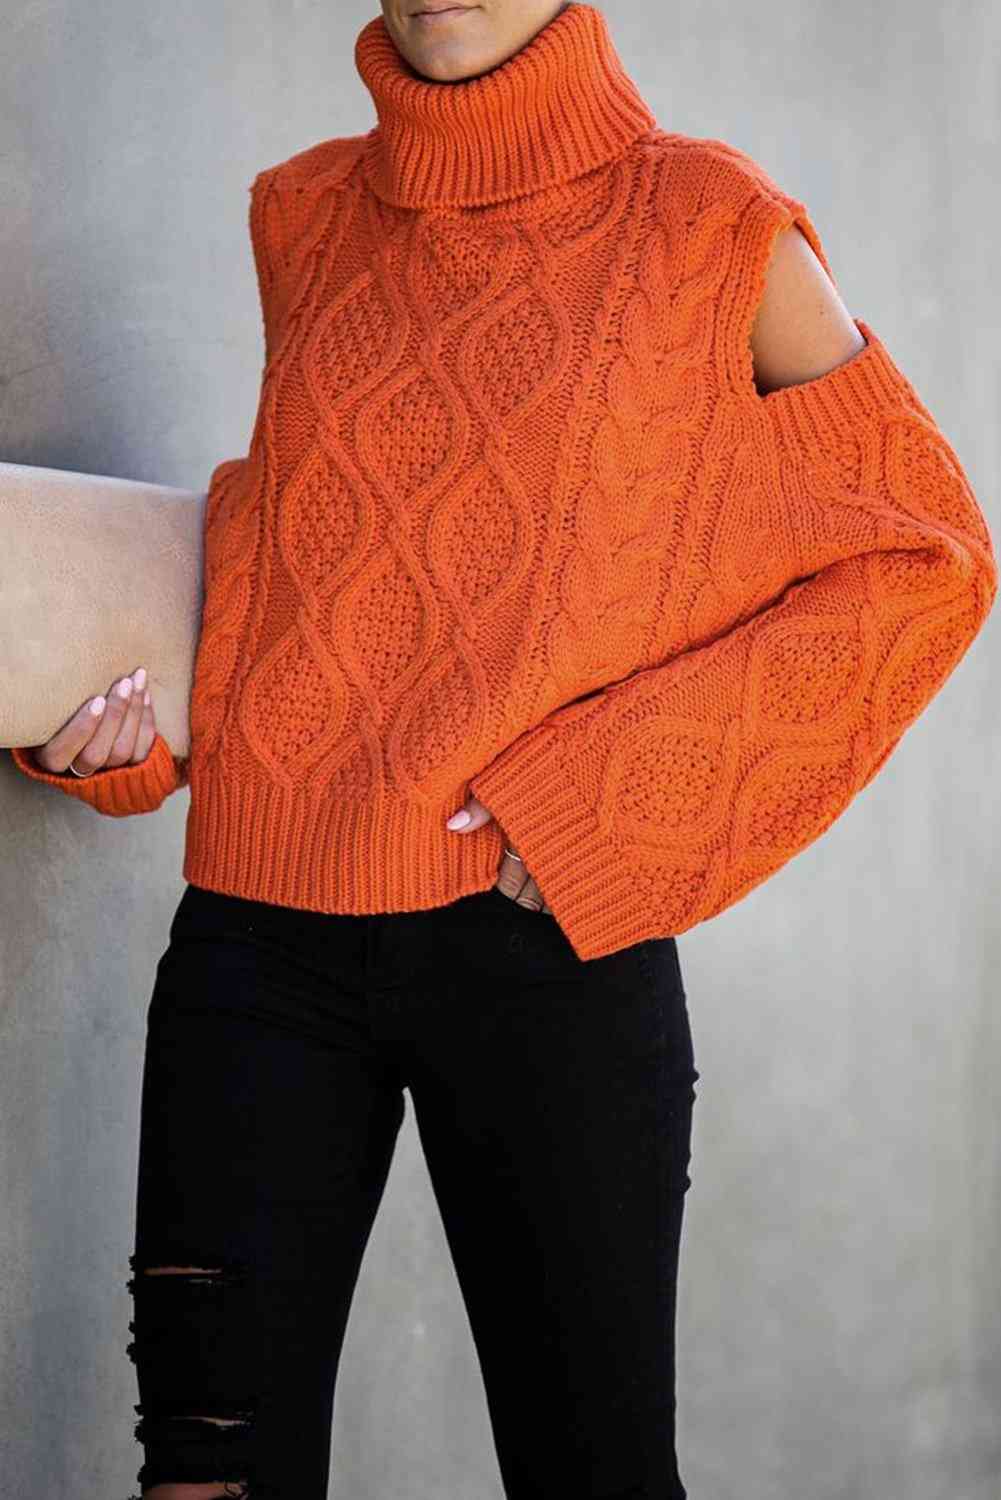 Pulover, pulover s teksturo hladnih ramen